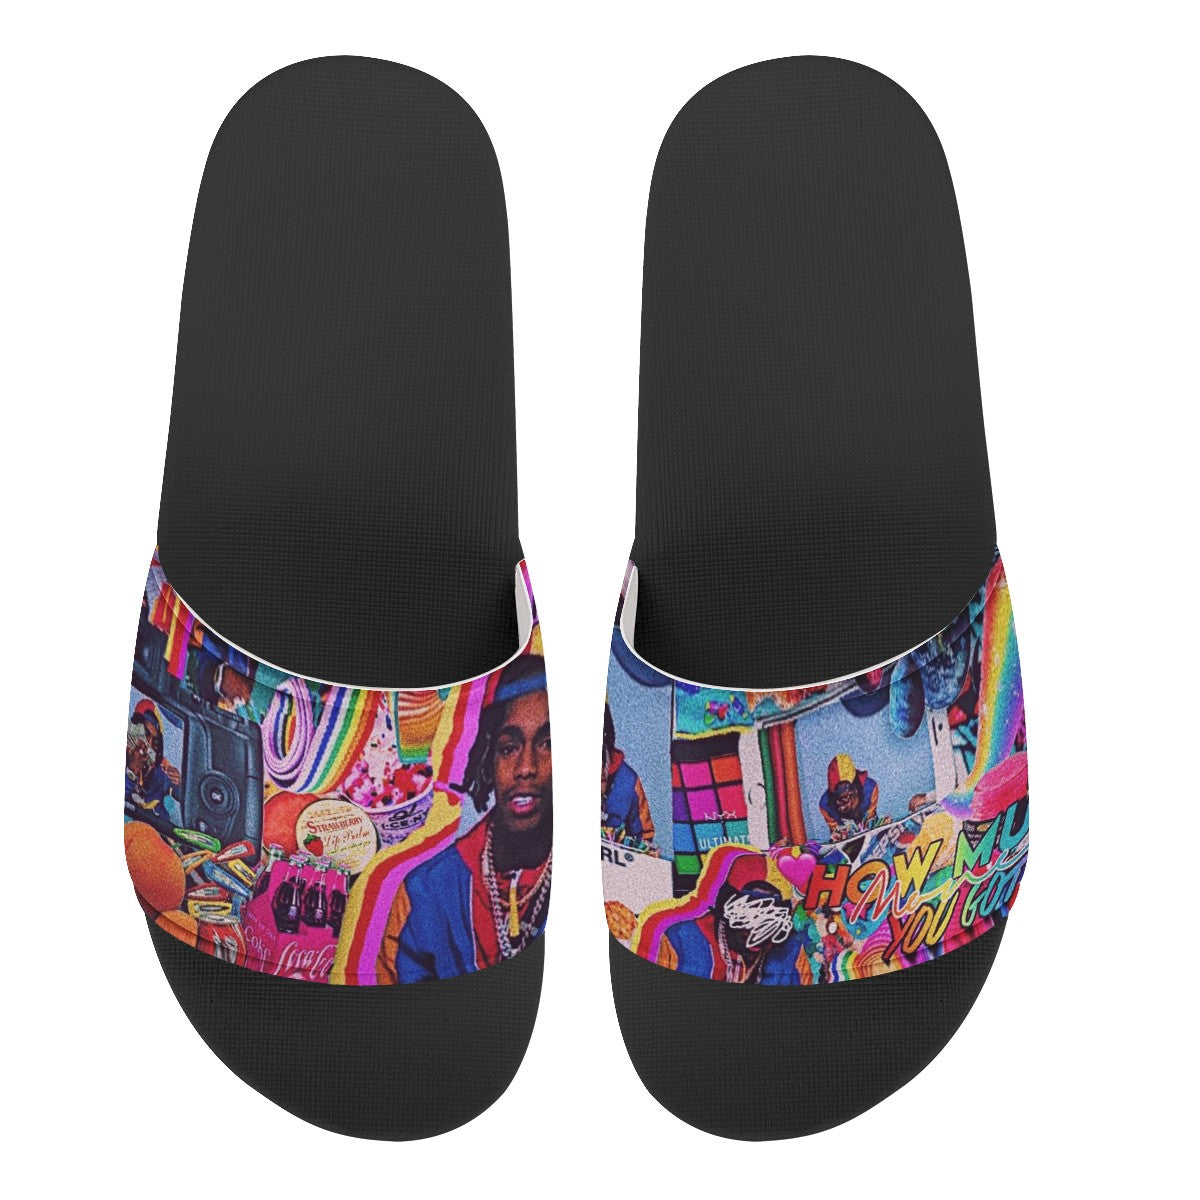 Ynw Melly Custom Slide Shoes